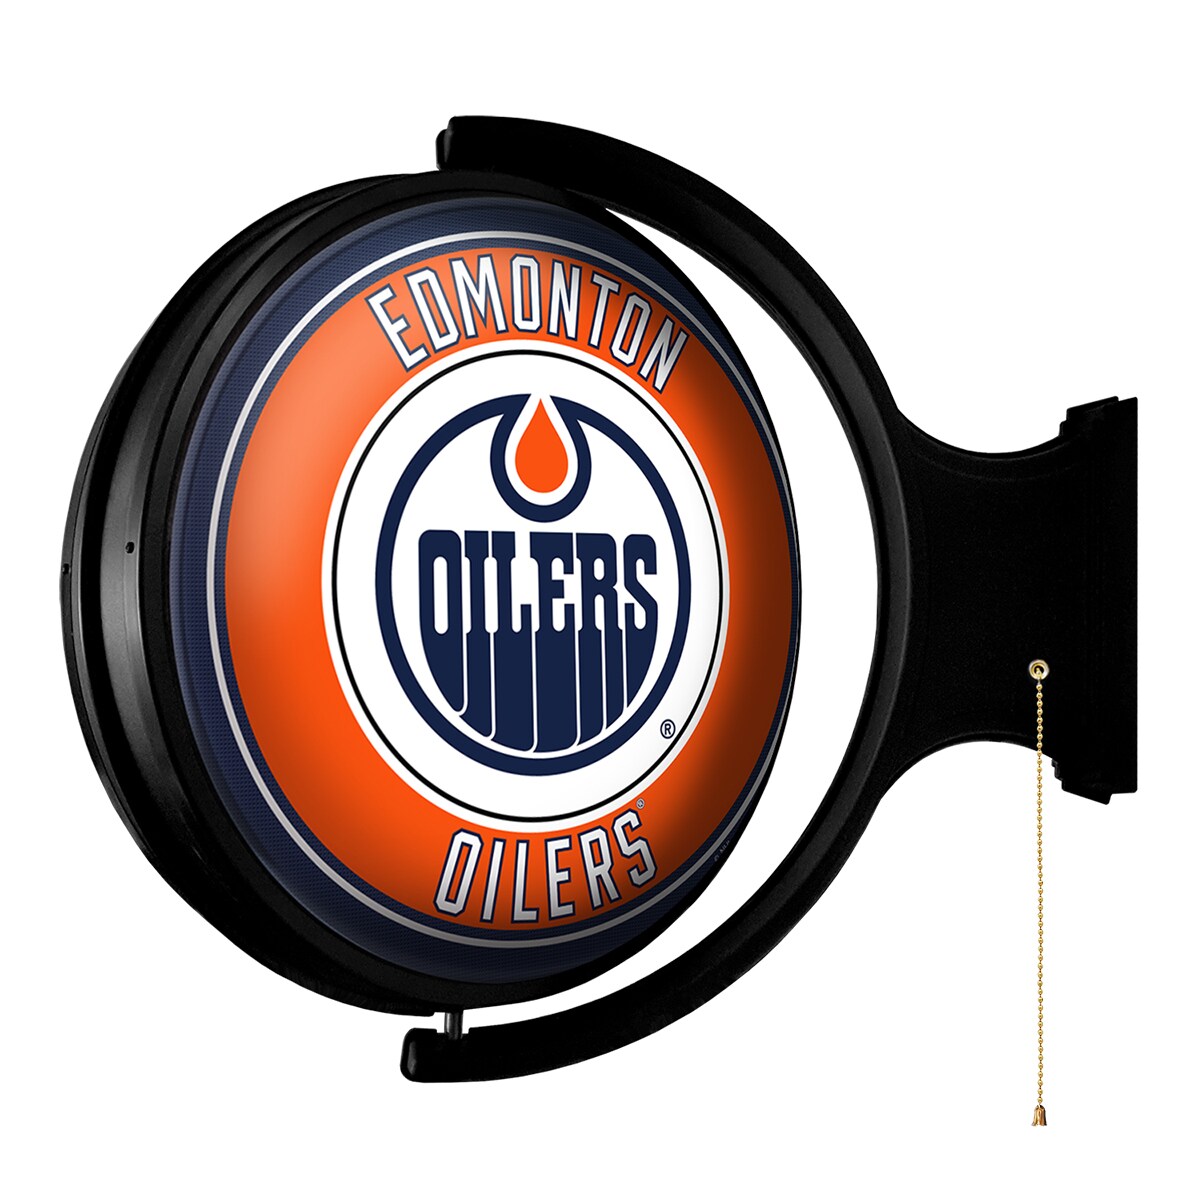 Edmonton Oilers Archives - Sports Closet